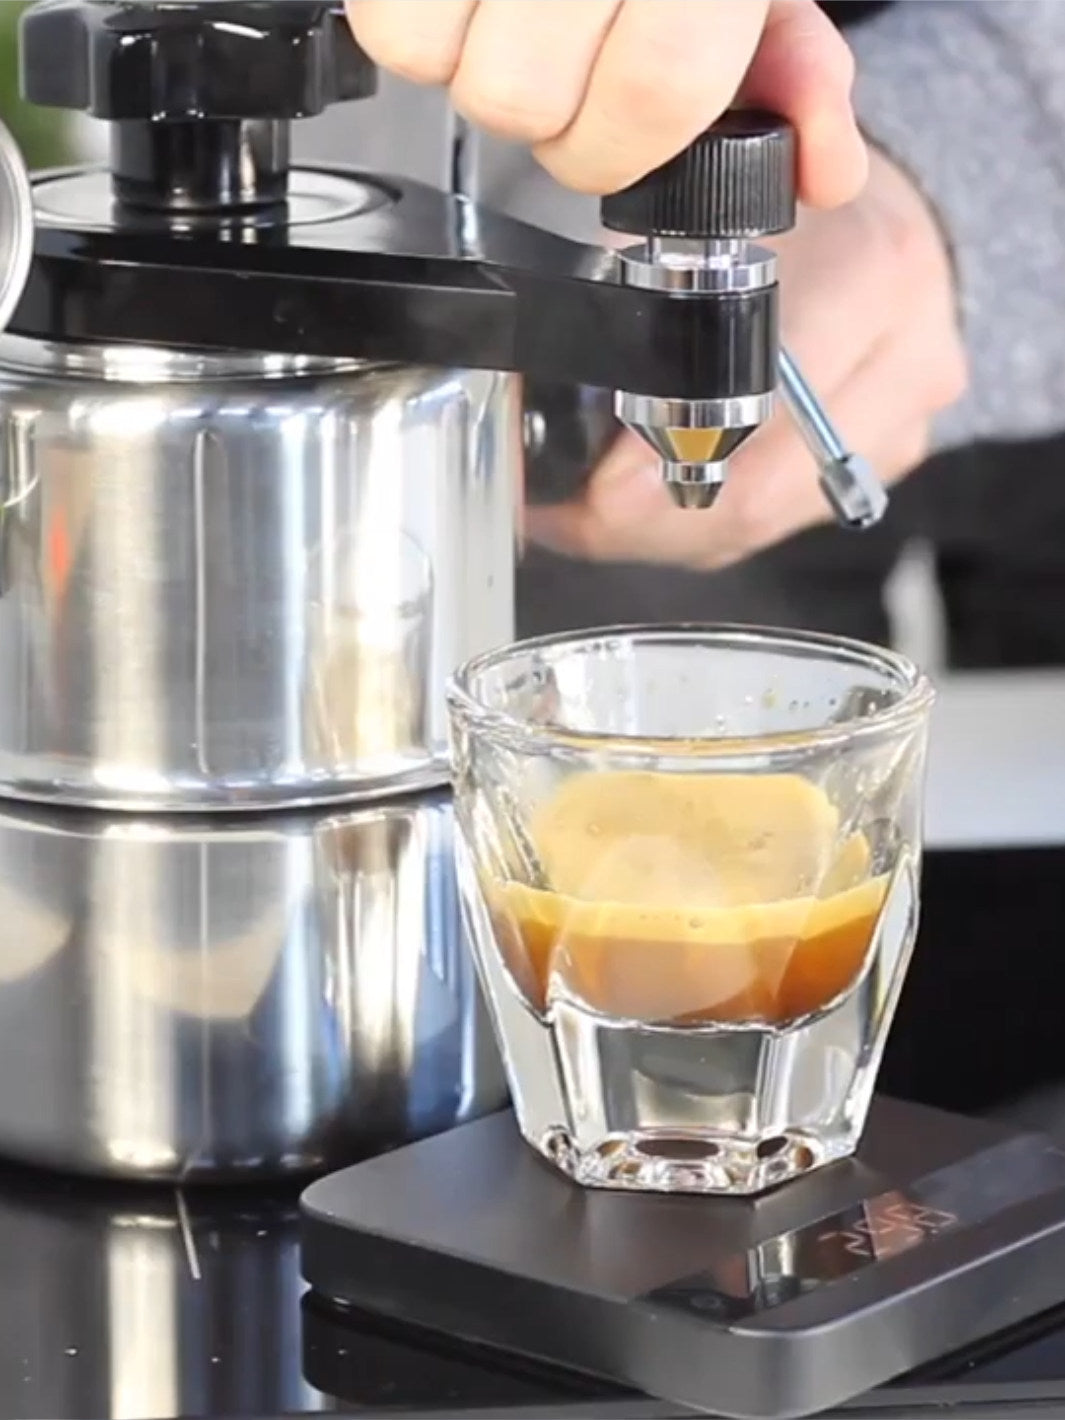 BELLMAN Stovetop Espresso & Cappuccino Maker with Pressure Gauge